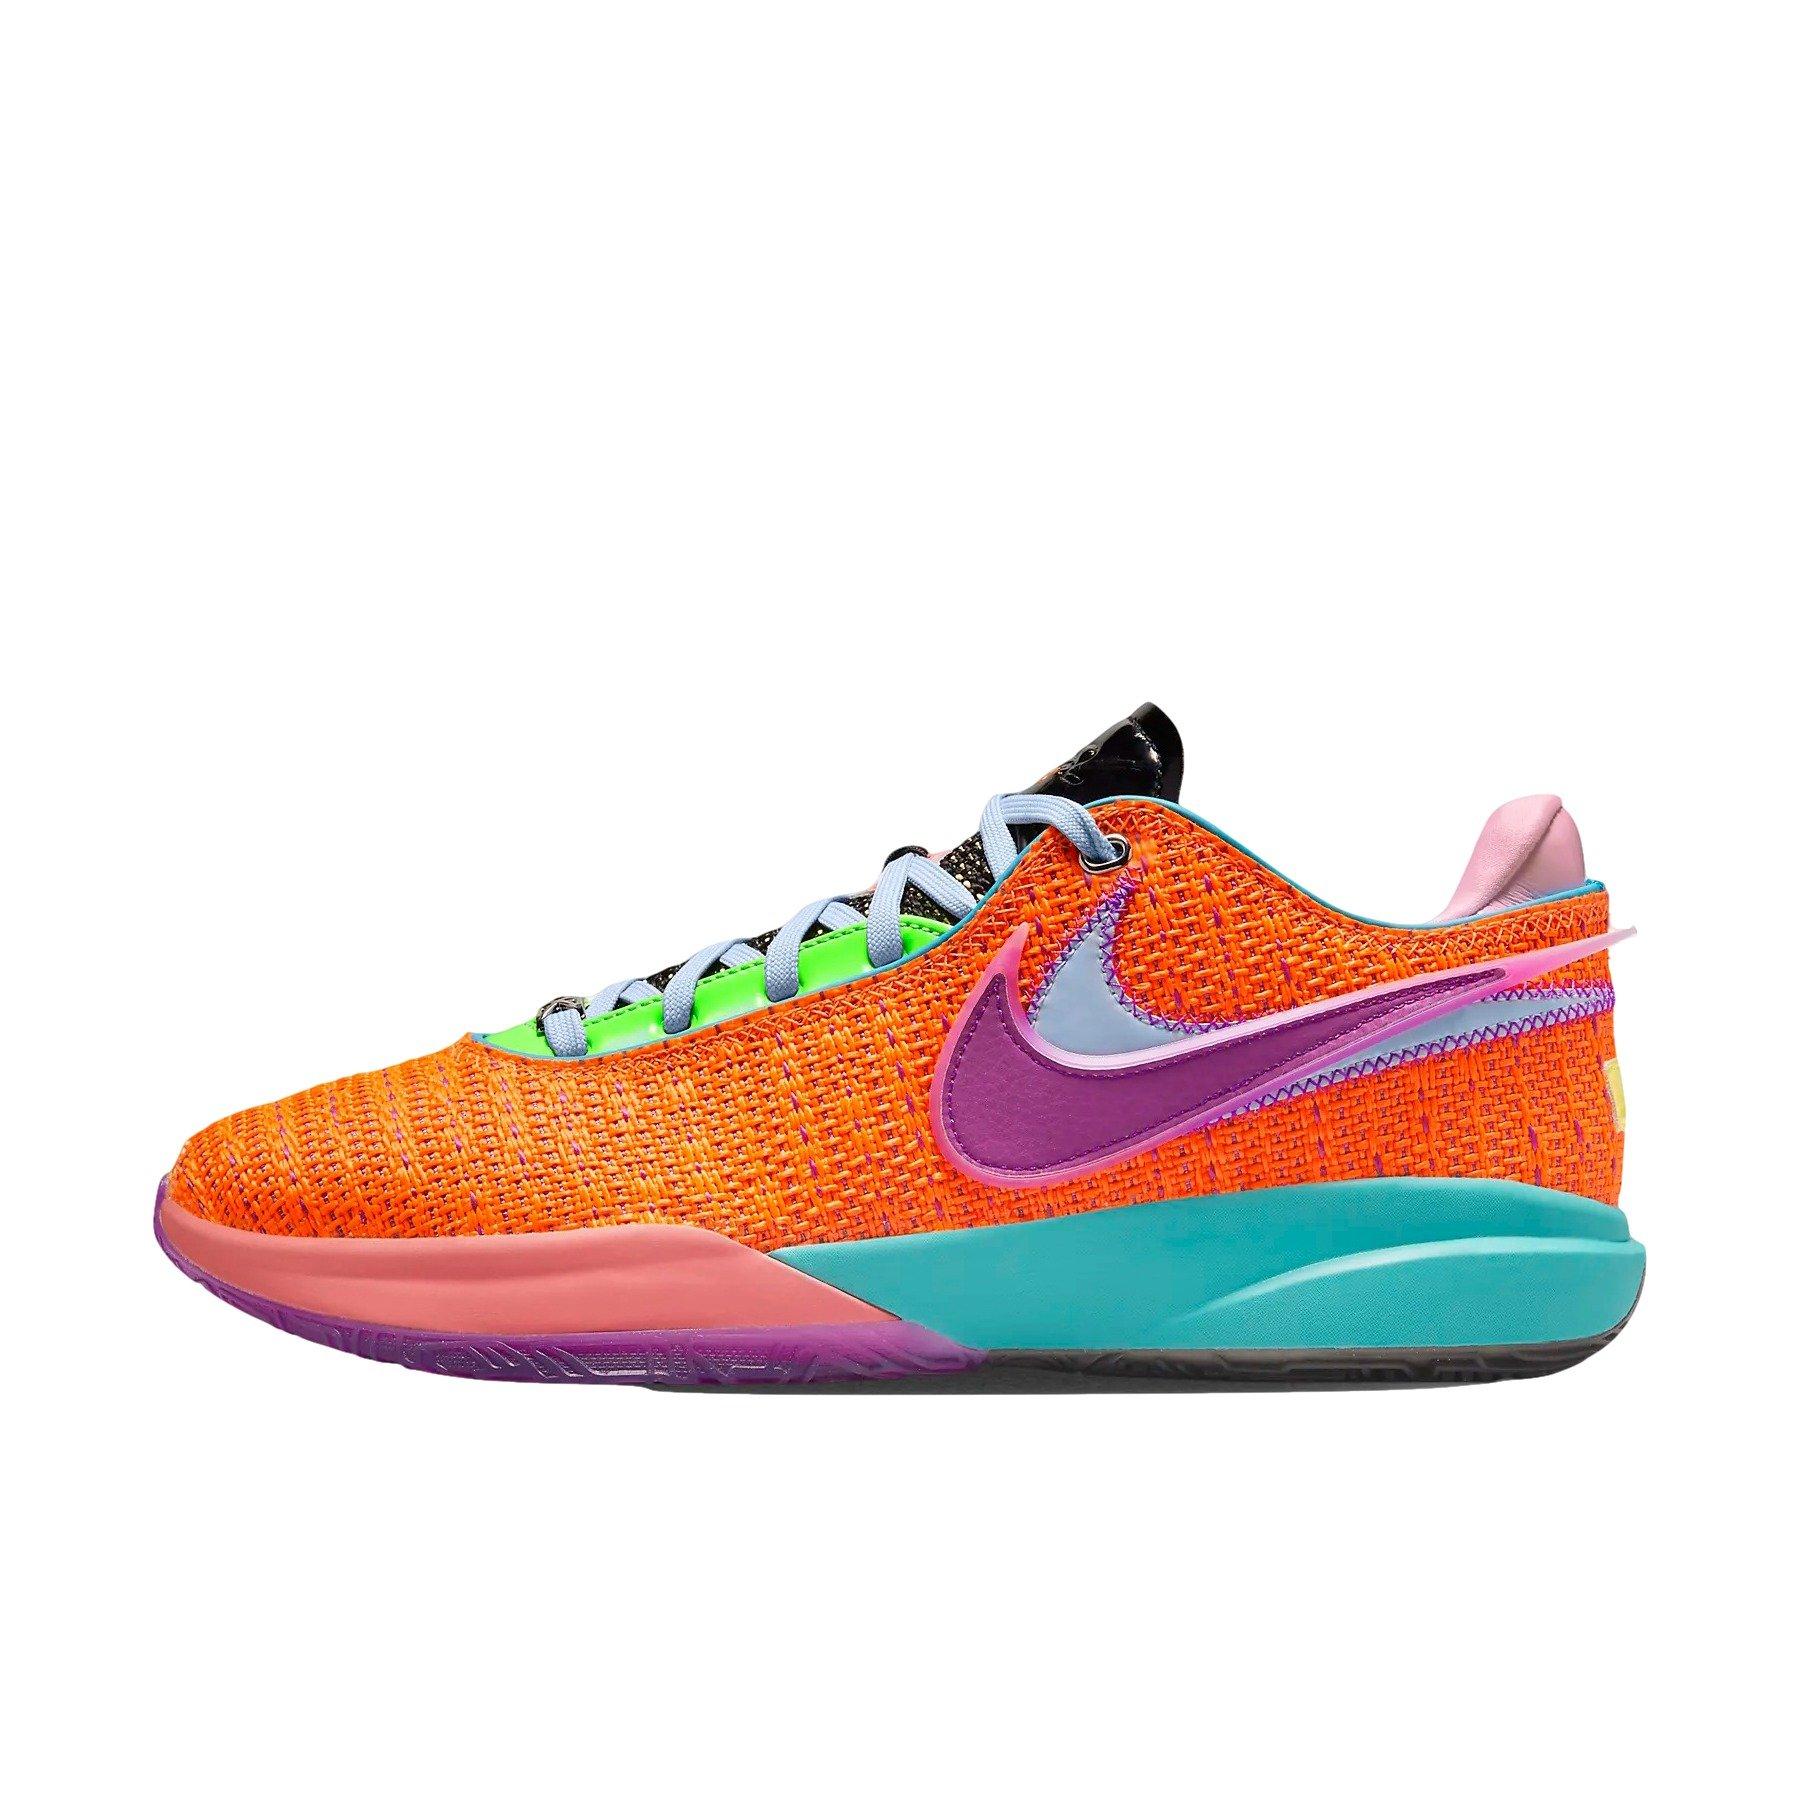 LeBron "Total Orange/Vivid Purple/Green Strike" Men's Basketball Shoe